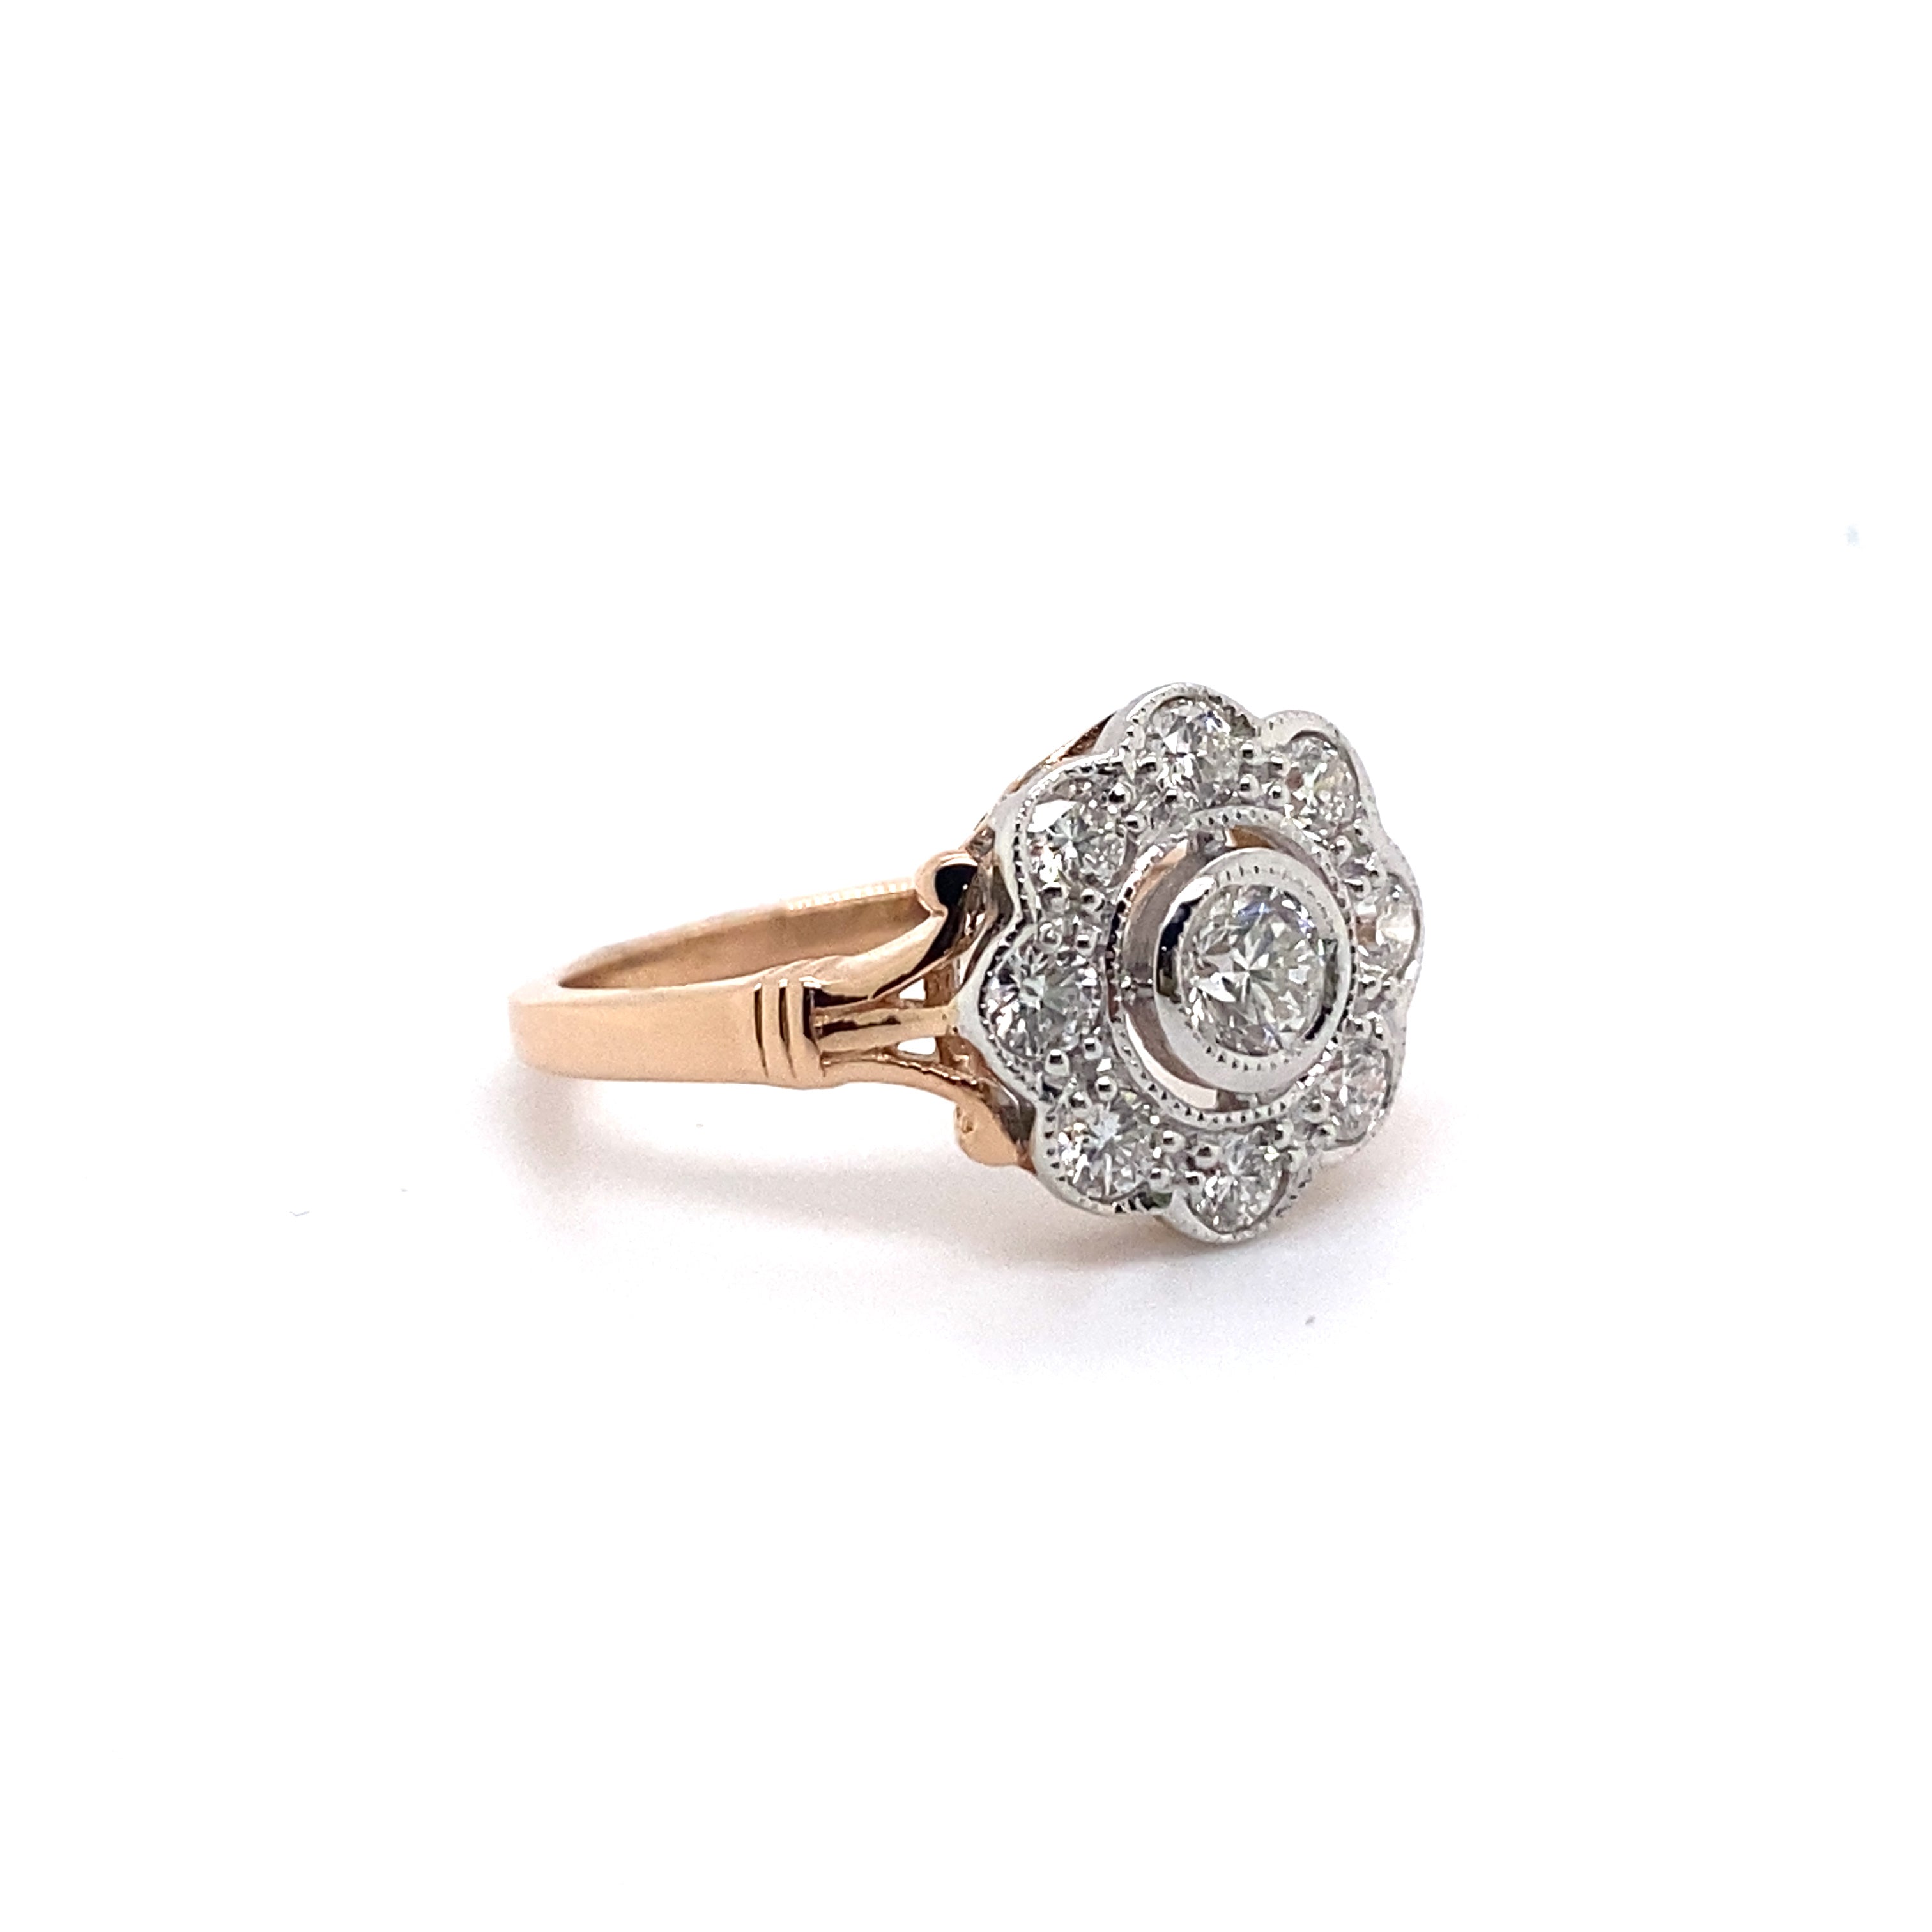 18ct rose gold cluster diamond ring.